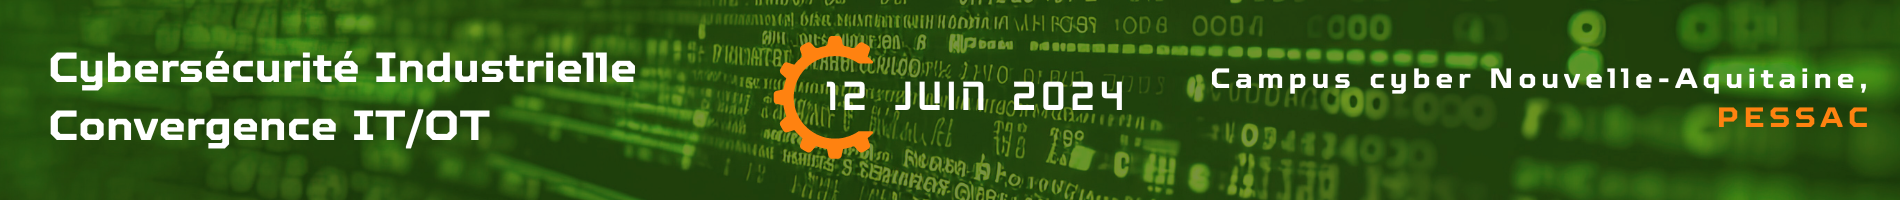 Header evenement ALPHA-RLH Cybersécurité industrielle : convergence IT/OT